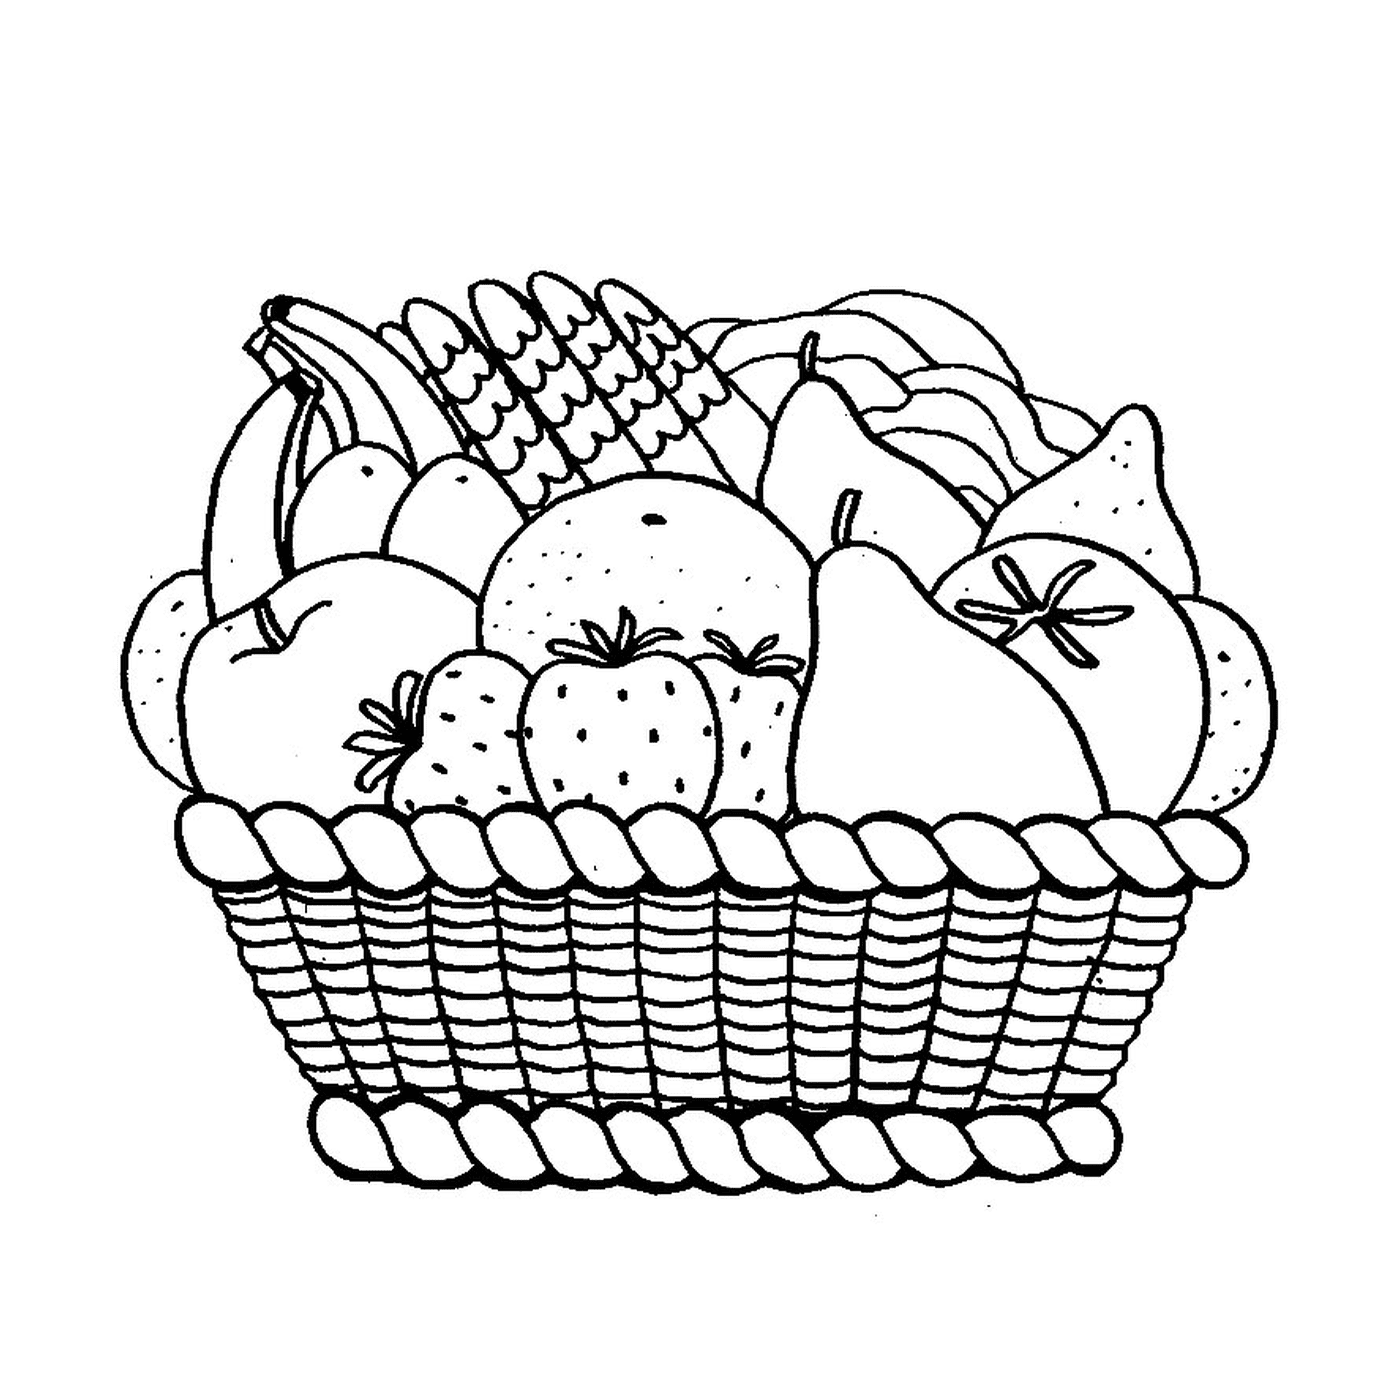  basket filled with fruit 